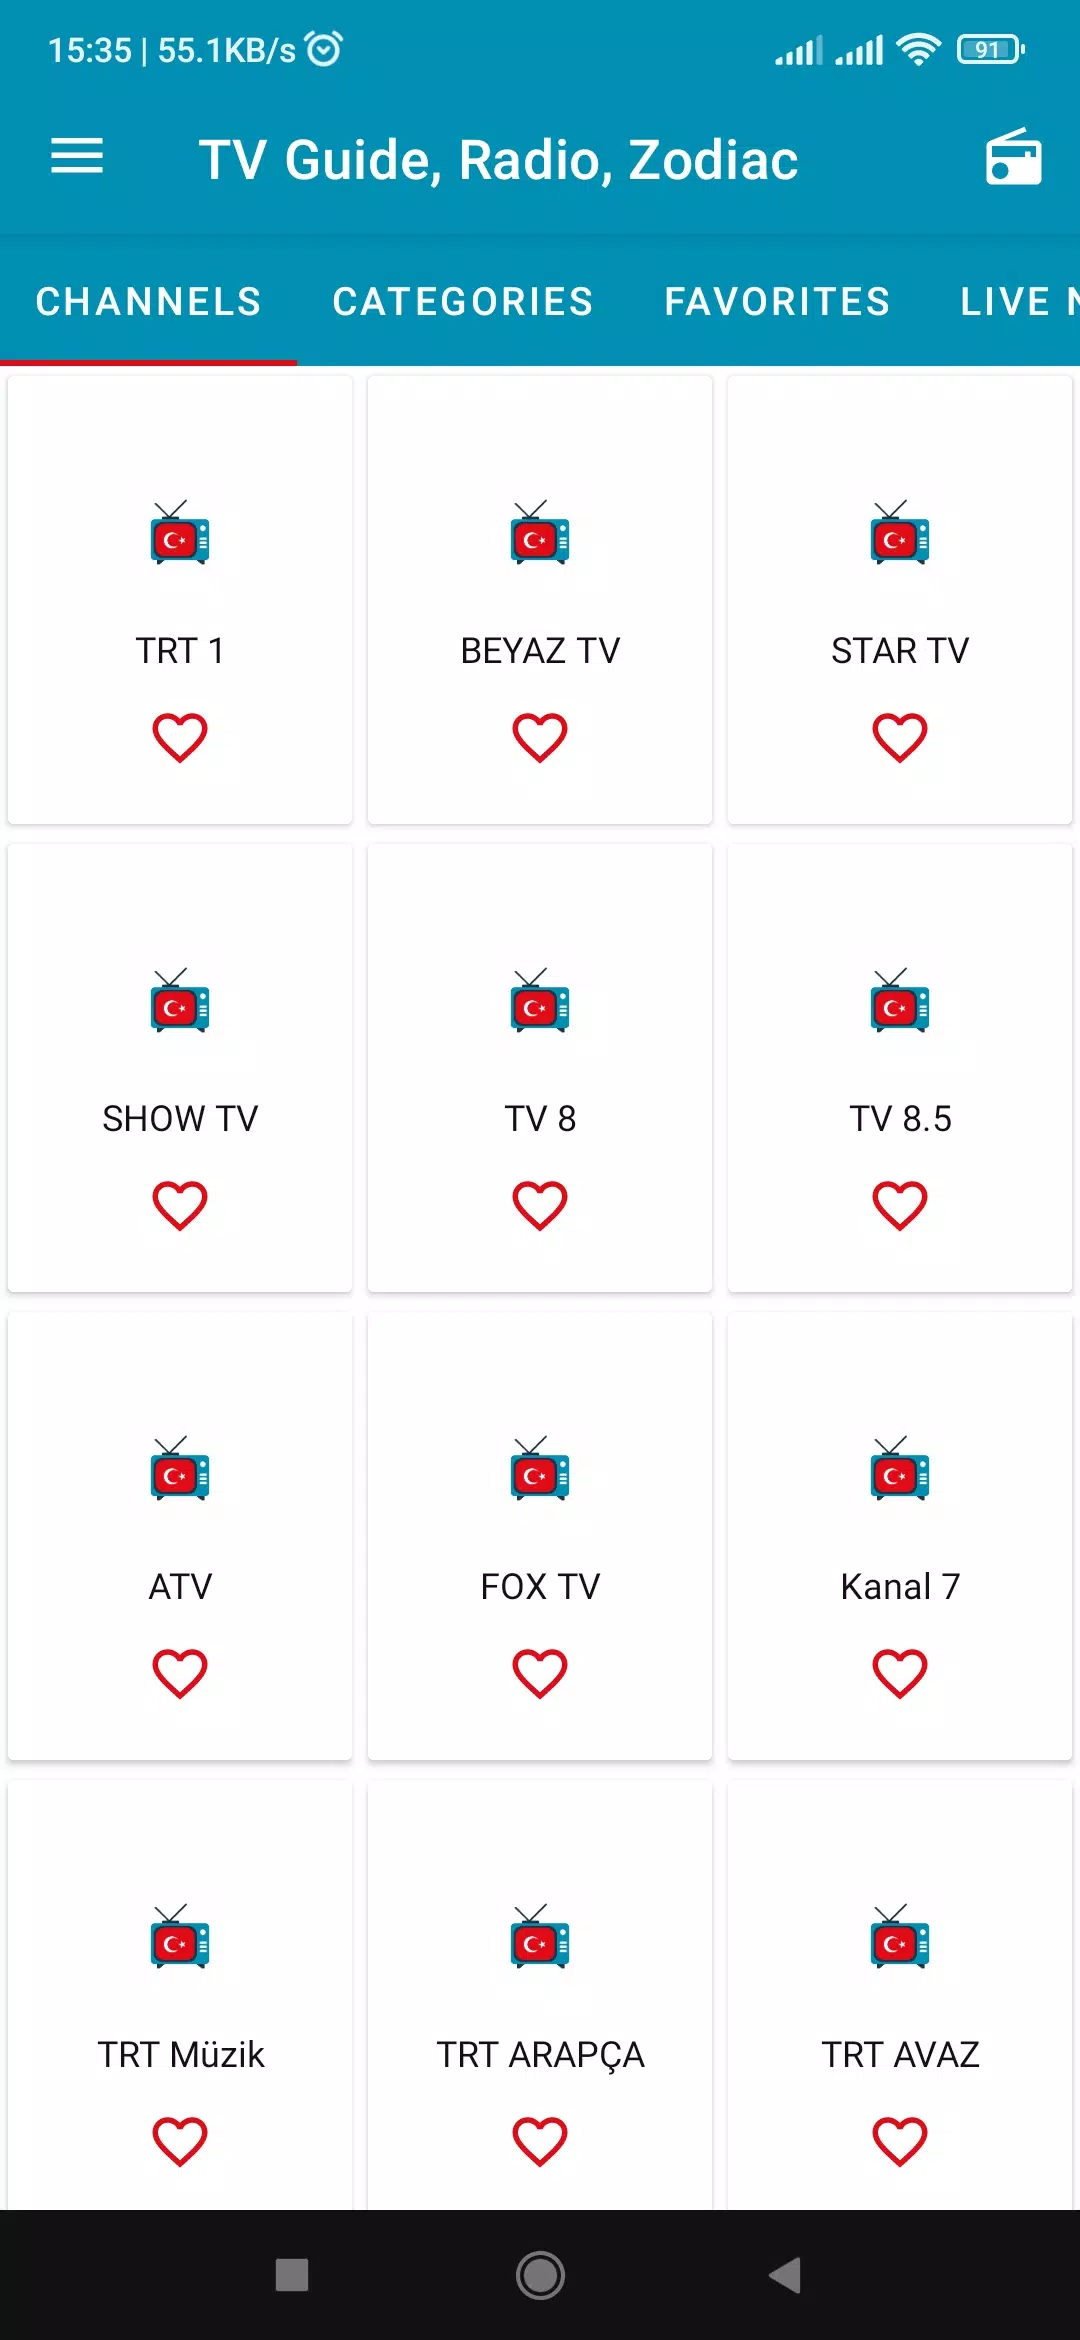 Скачать Canlı TV Rehberi - Mobil Radyo APK для Android